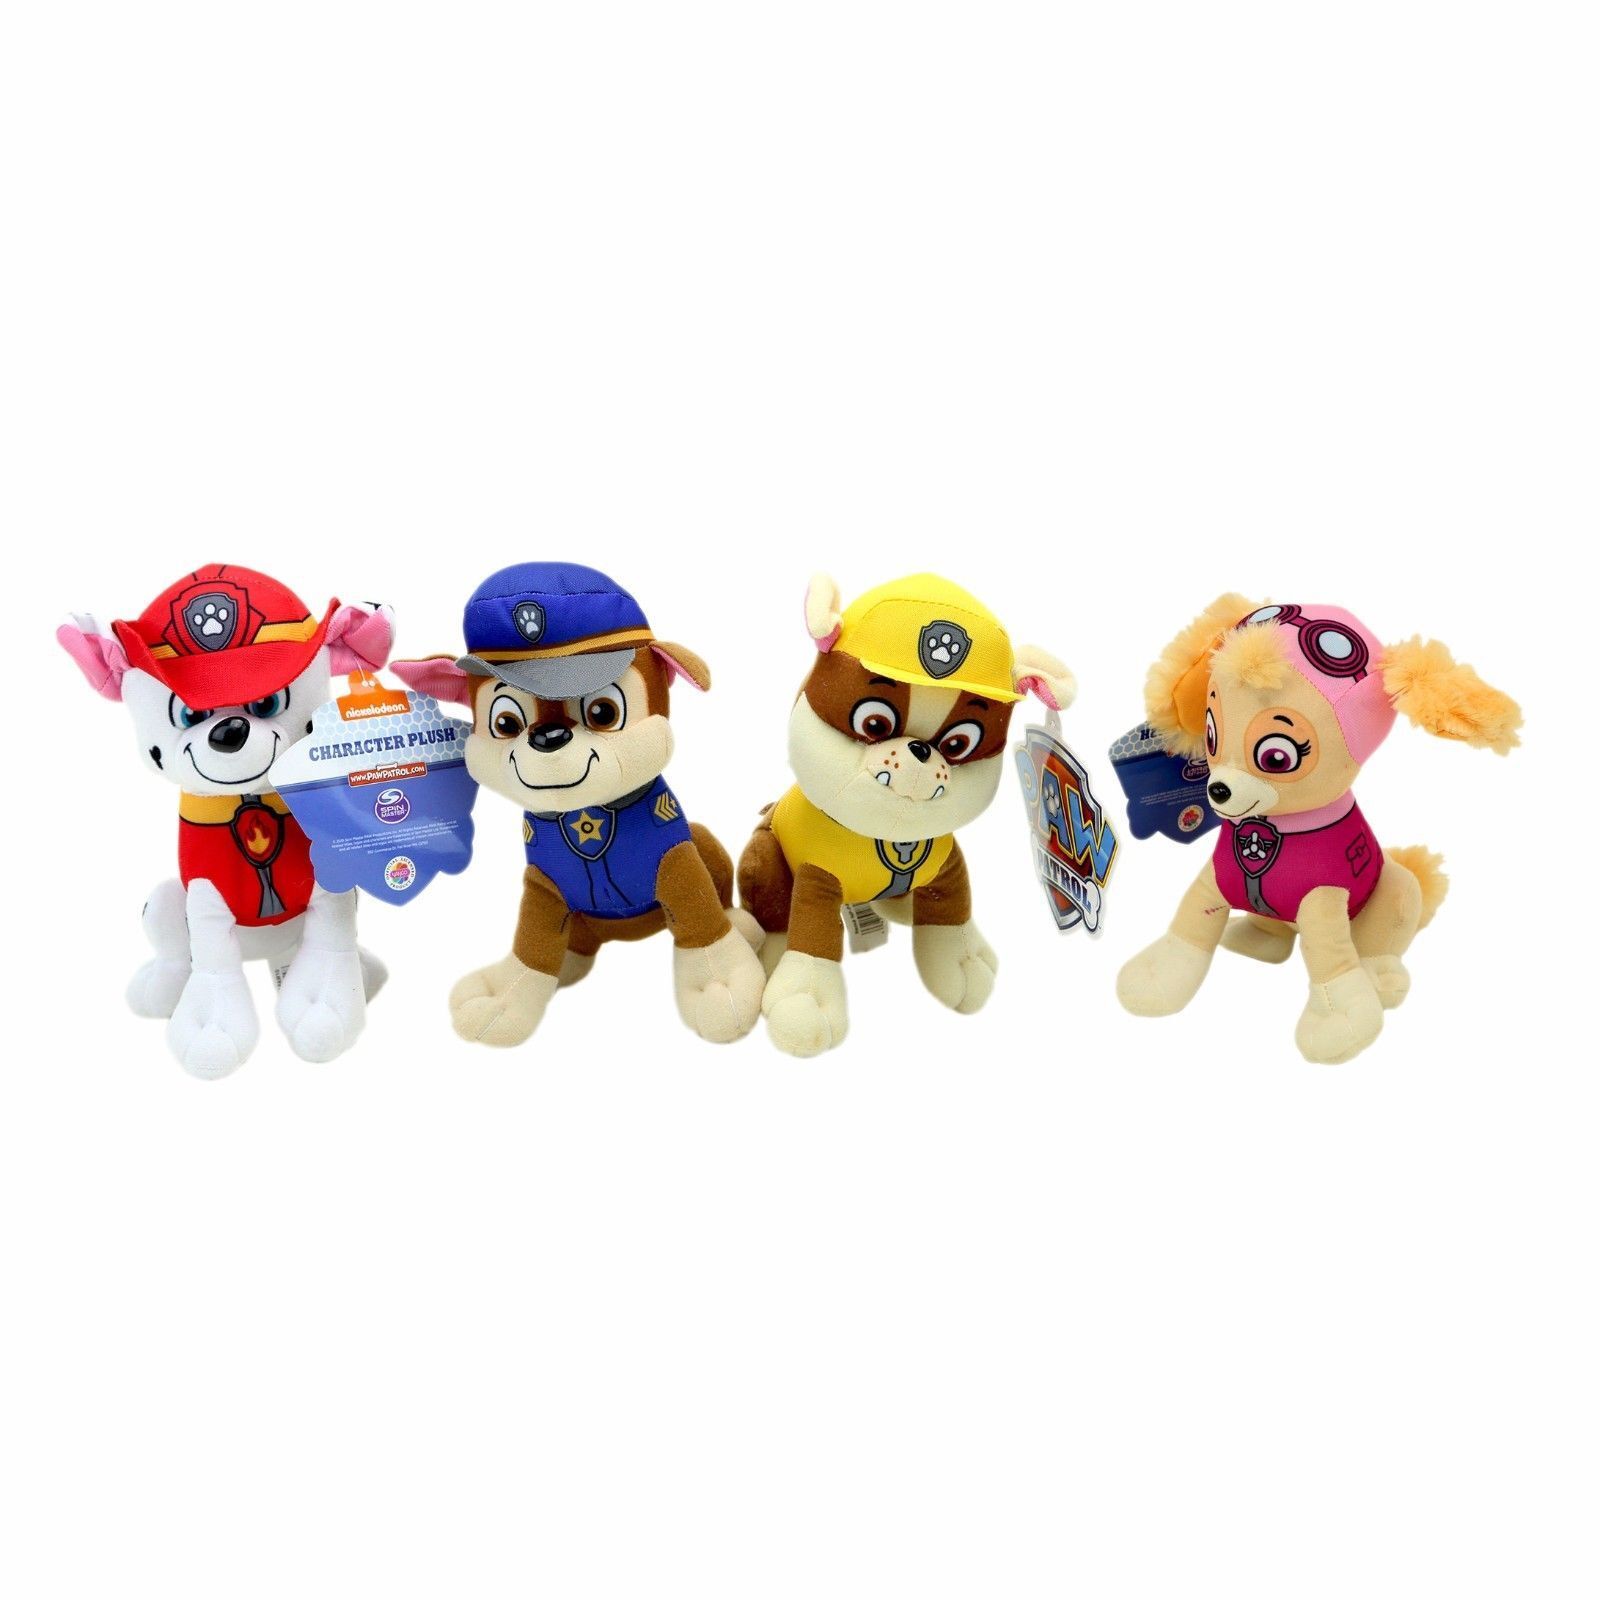 New 8" Paw Patrol Plush Stuffed Animal Toy Set: Chase, Rubble, Marshall & Skye Spin Master NP-PAW10-SET - фотография #2